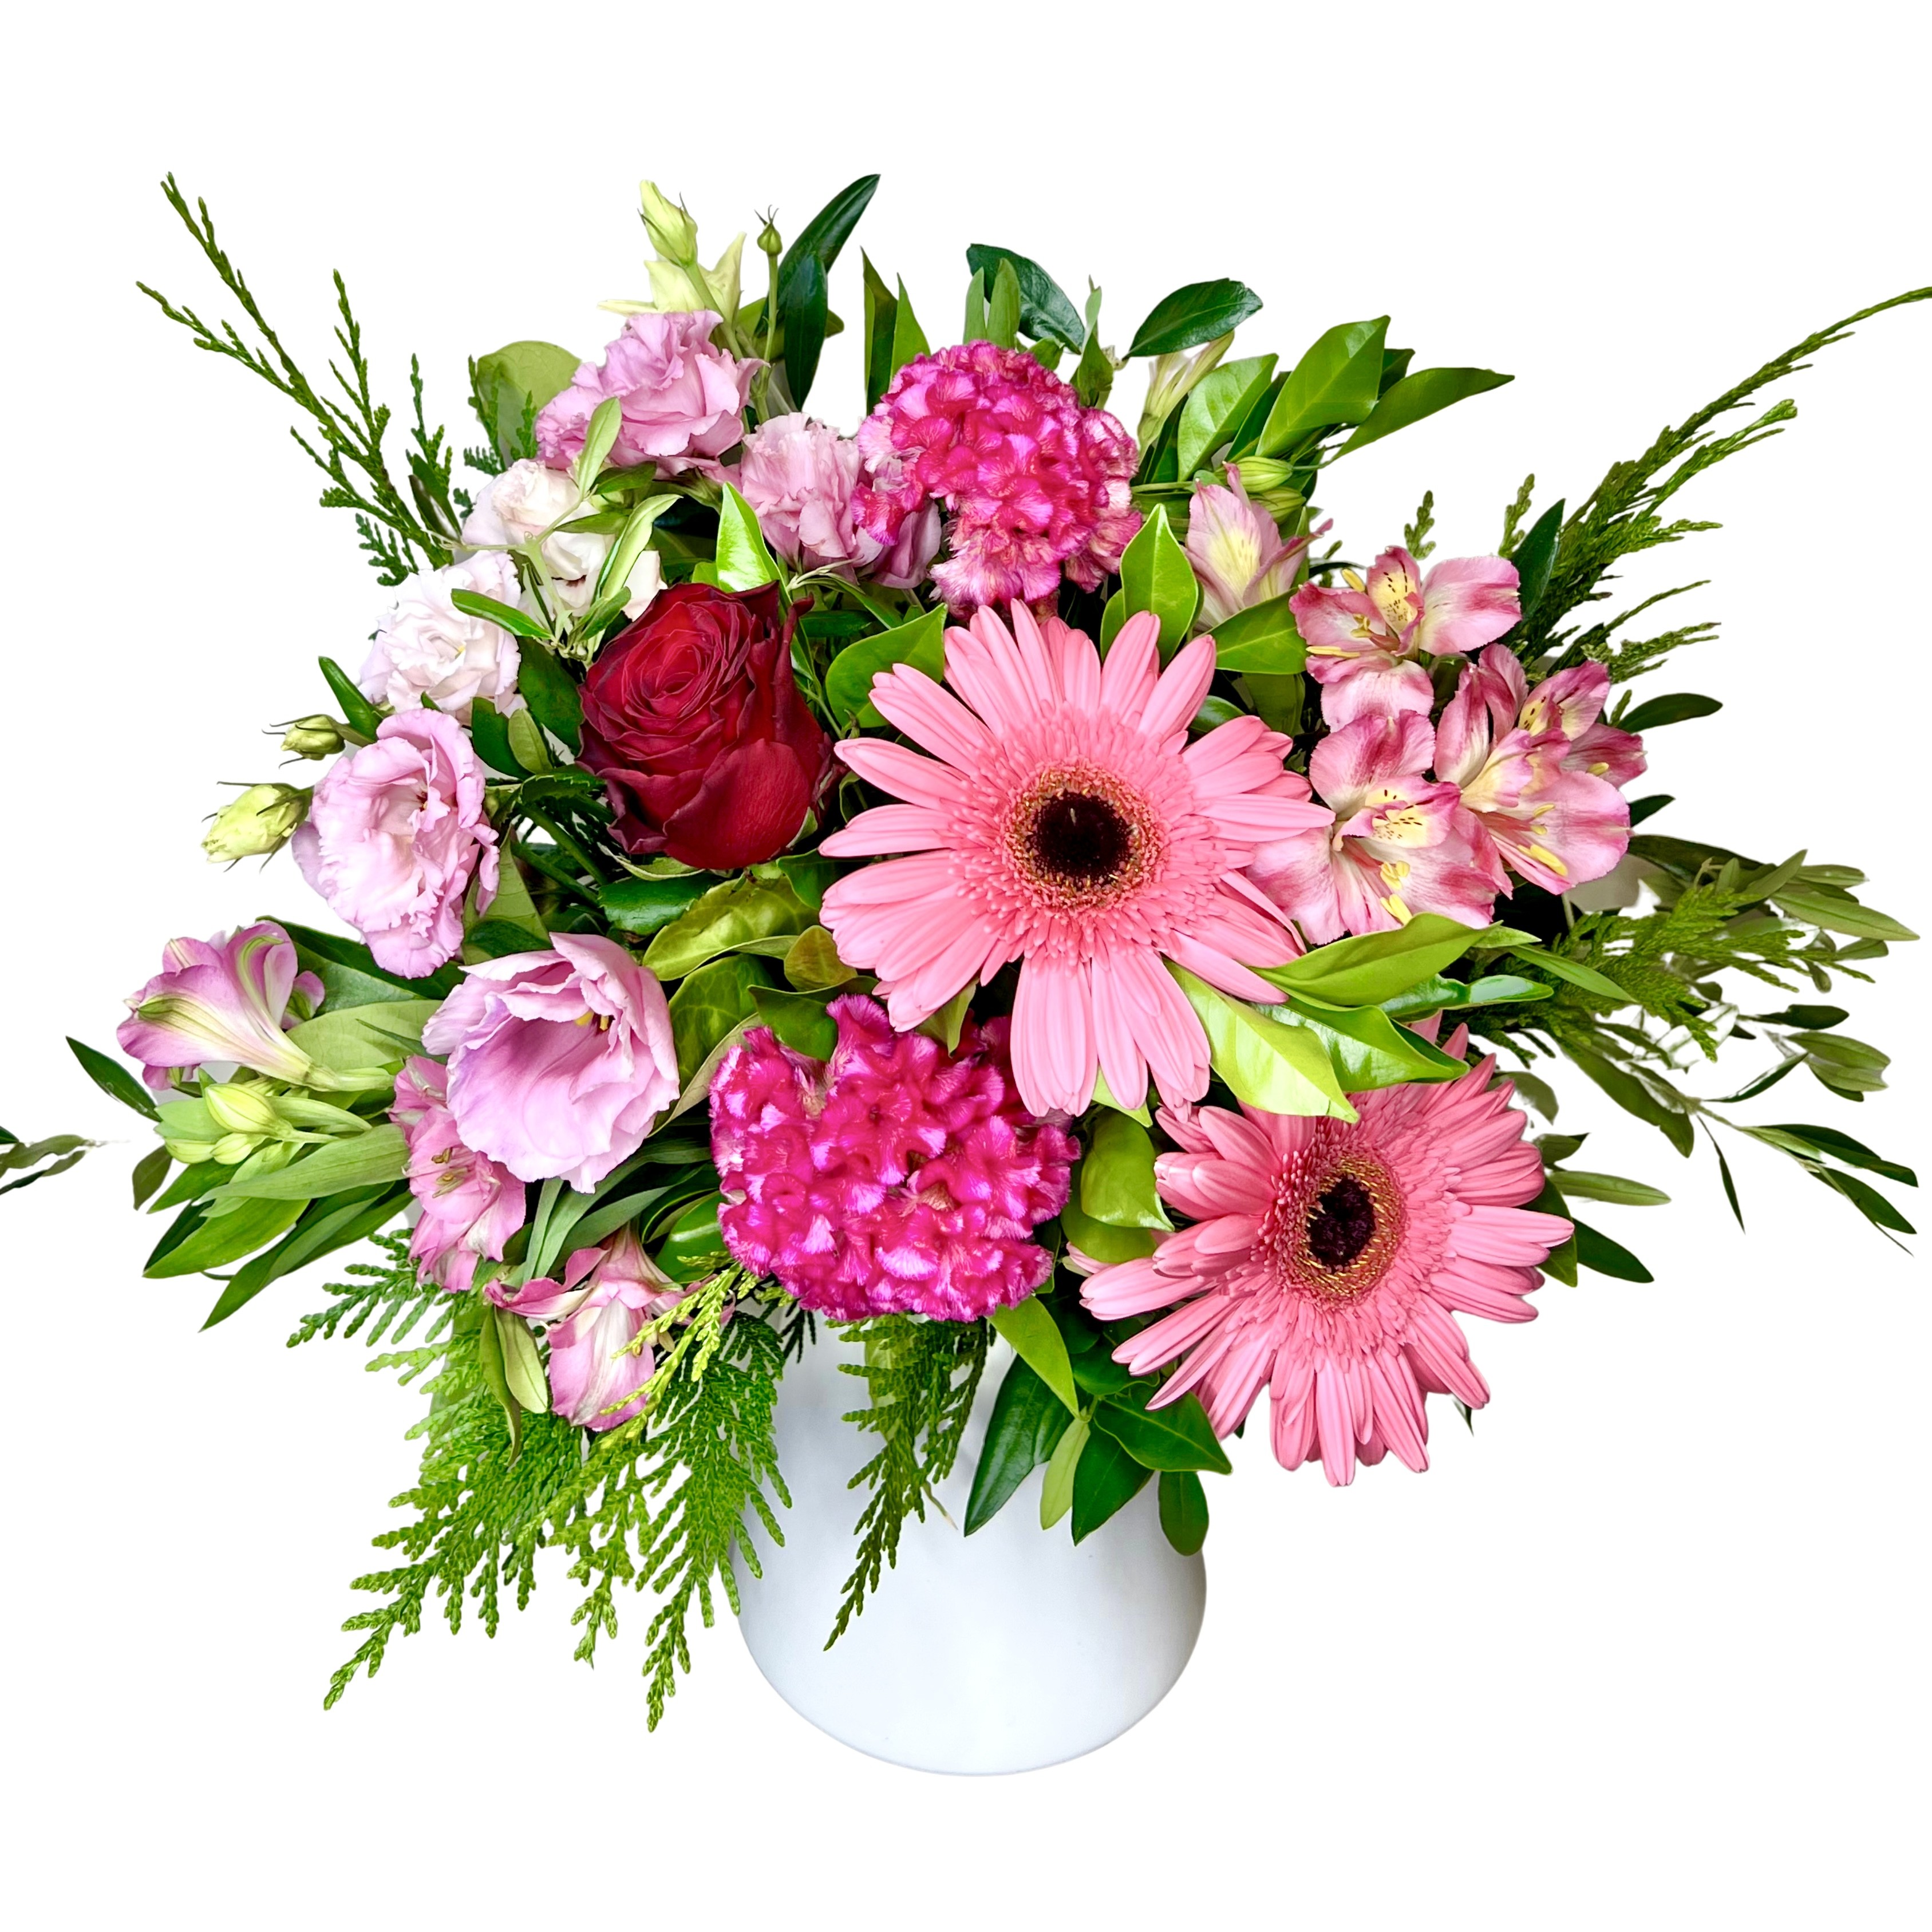 Audacious Vase of Flowers